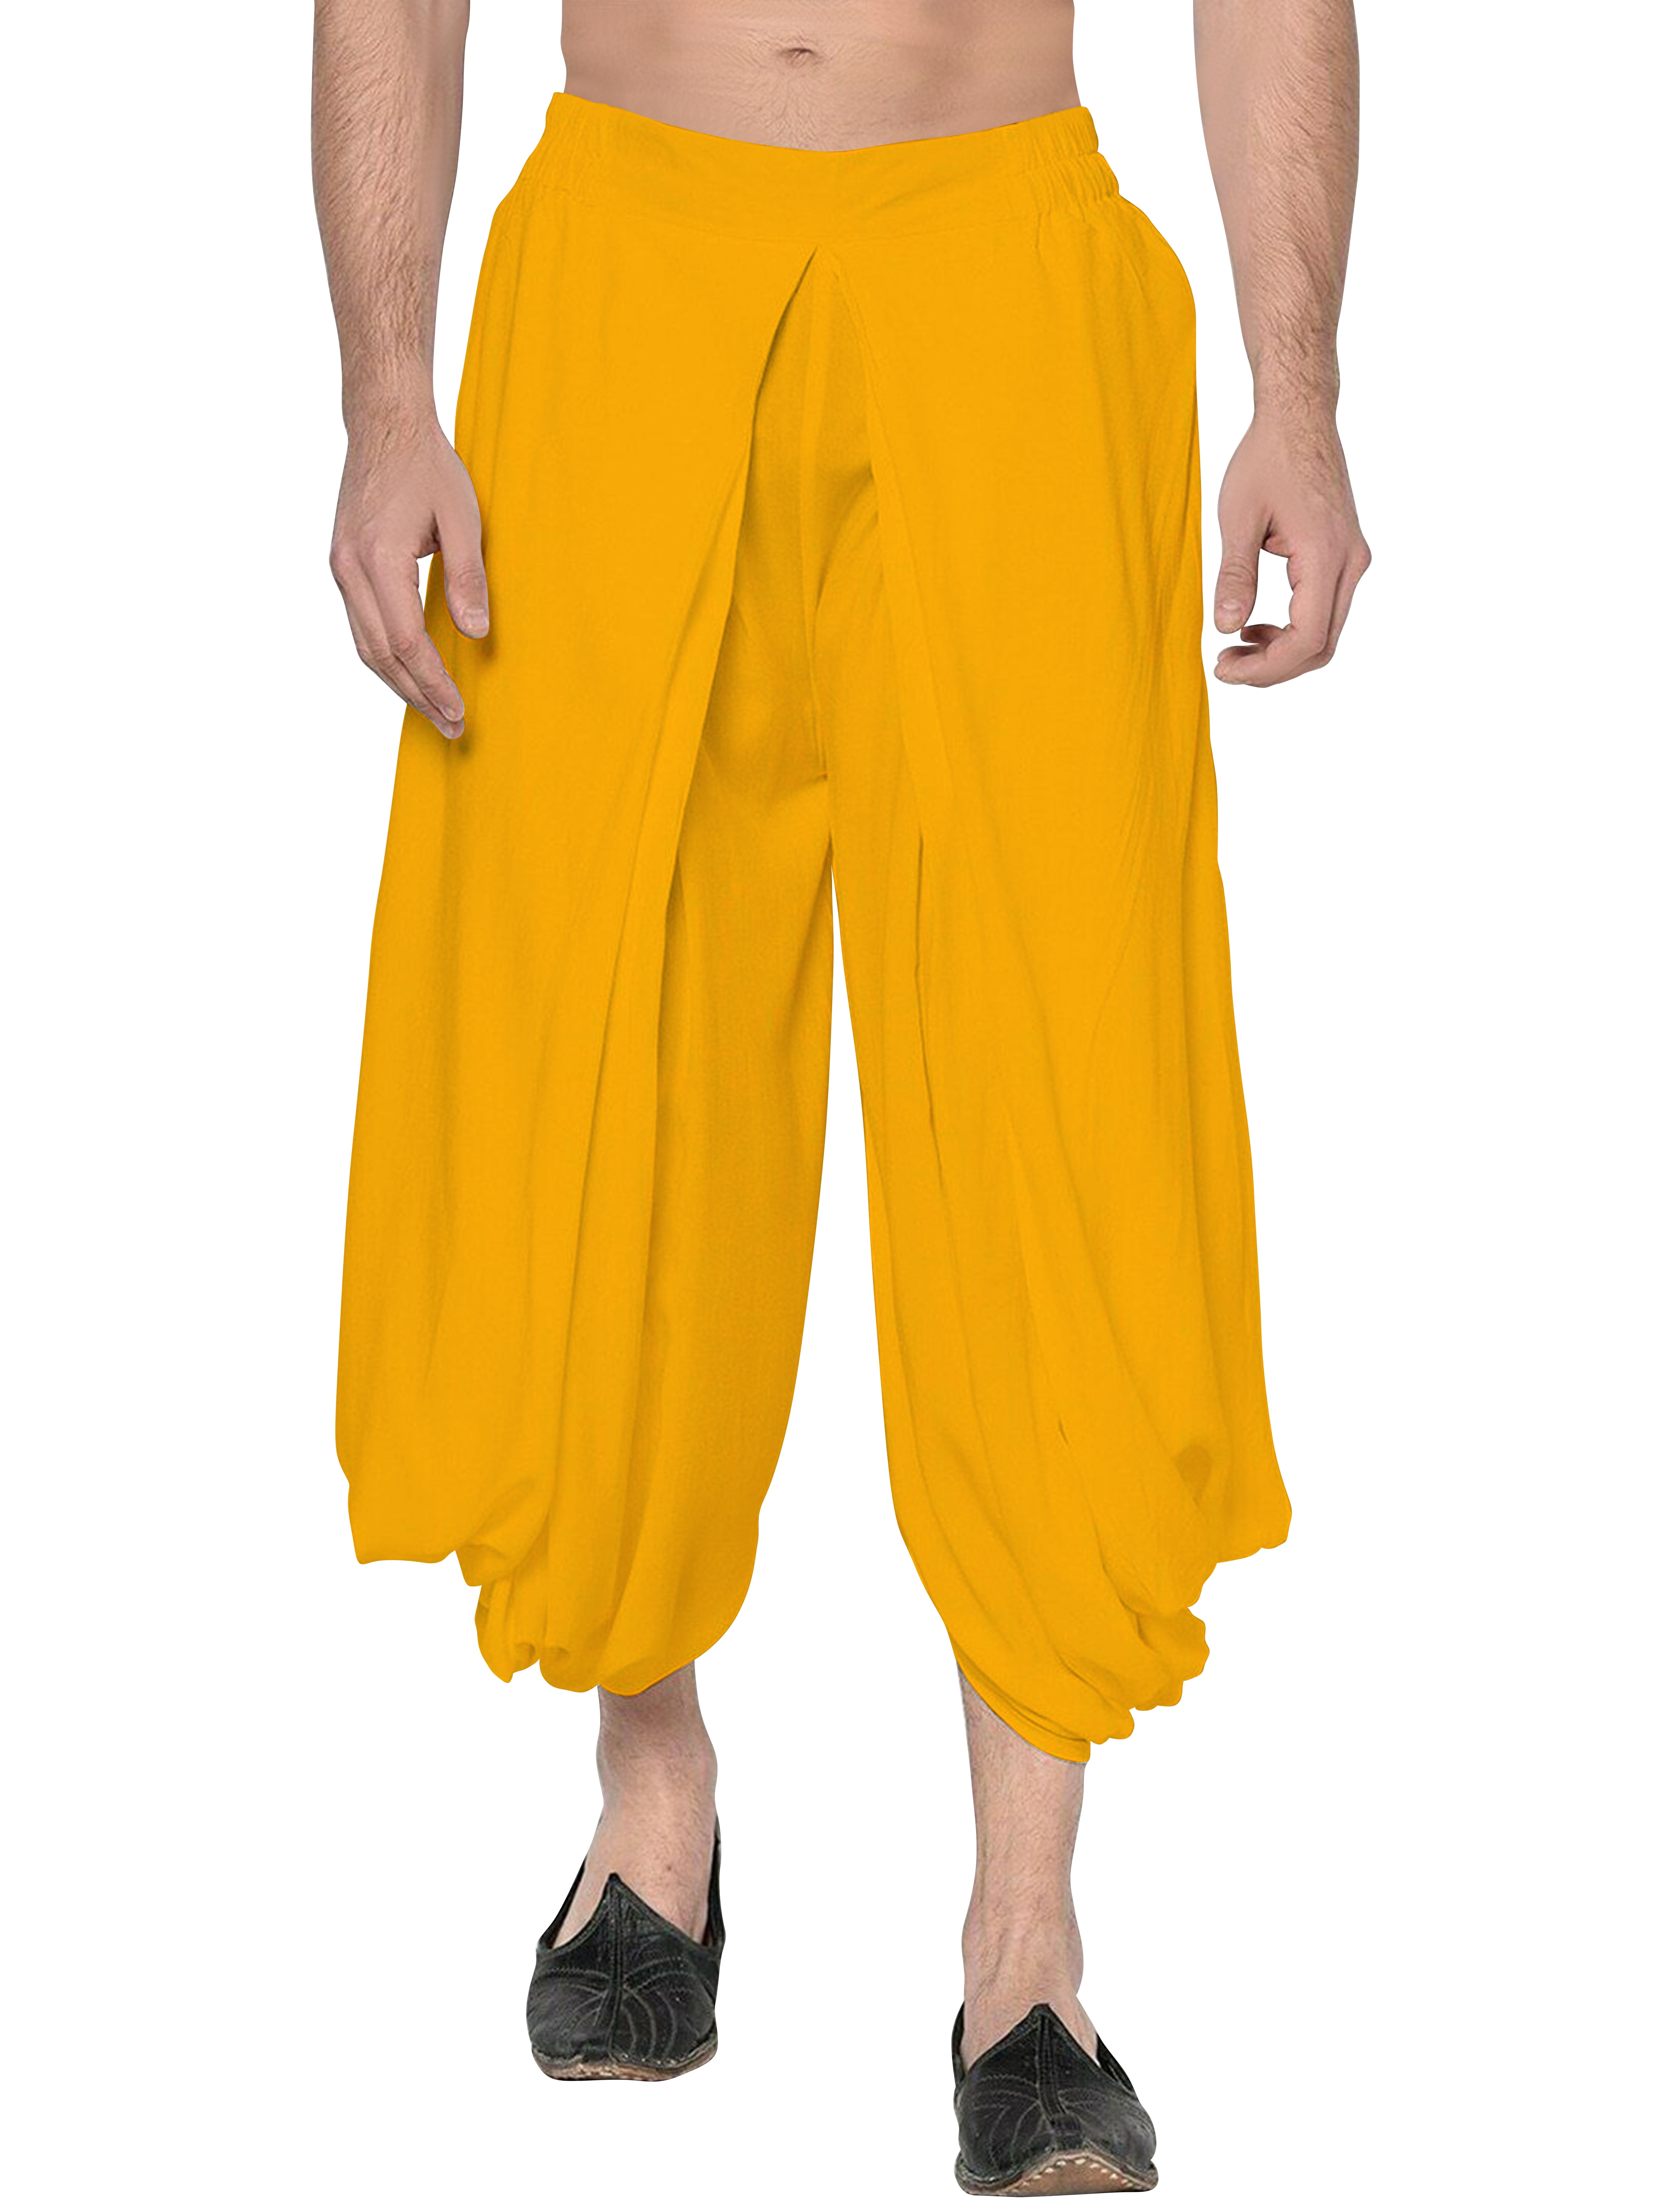 Women's Indian Pants - 25-75% OFF - Buy Indian Pants for Women Online -  Dubai, Abu Dhabi, UAE - Namshi